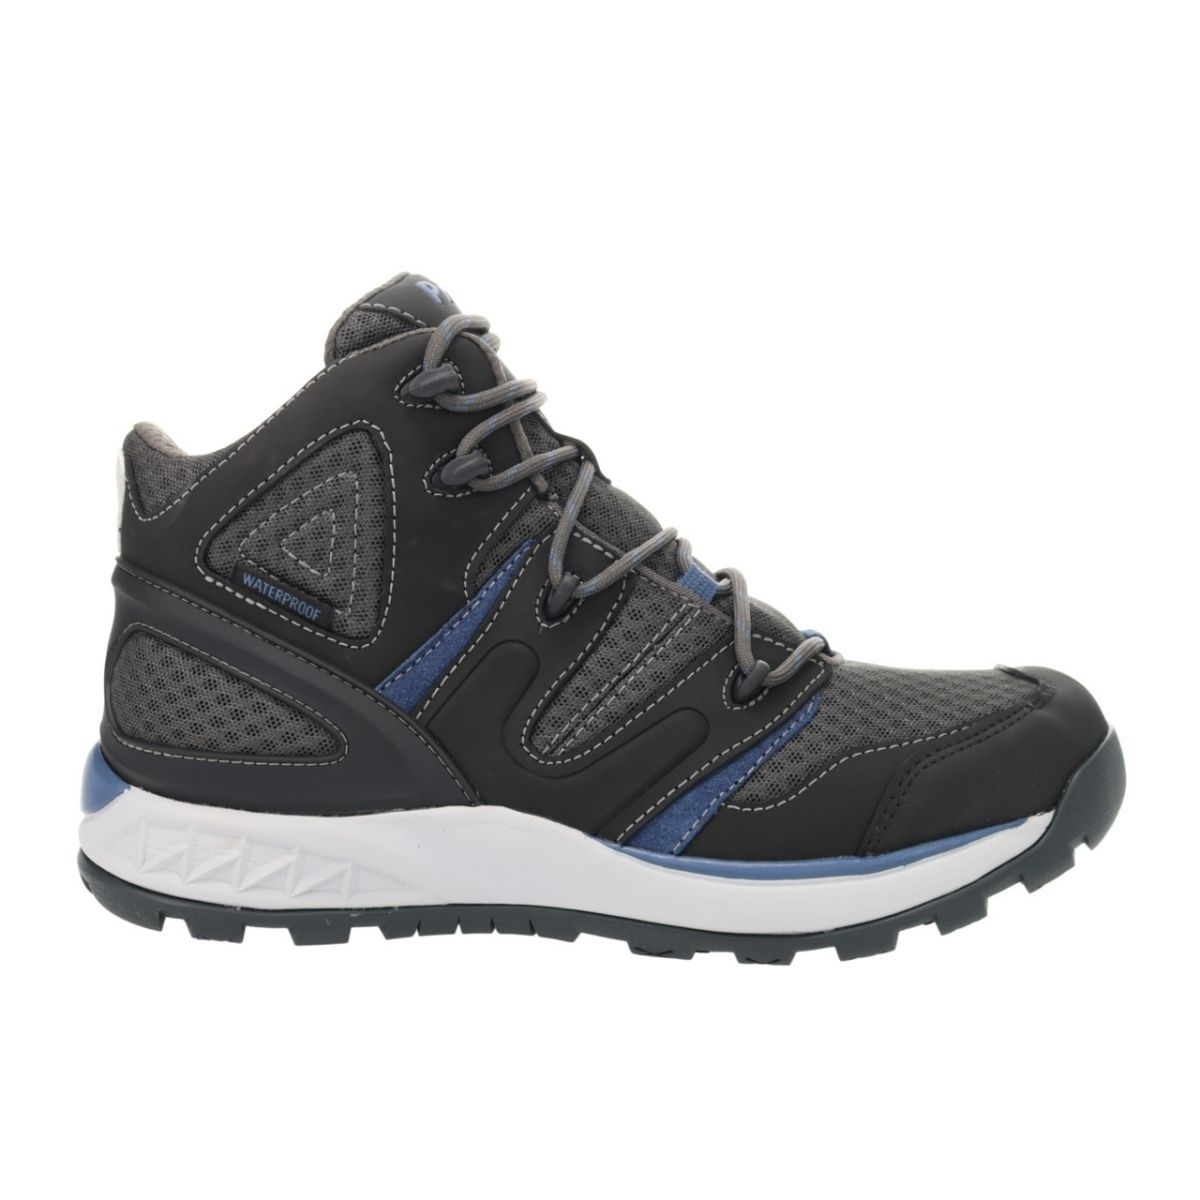 Propet Men's Veymont Waterproof Hiking Boot Grey/Blue - MOA022SGRB GREY/BLUE - GREY/BLUE, 10.5 XX-Wide